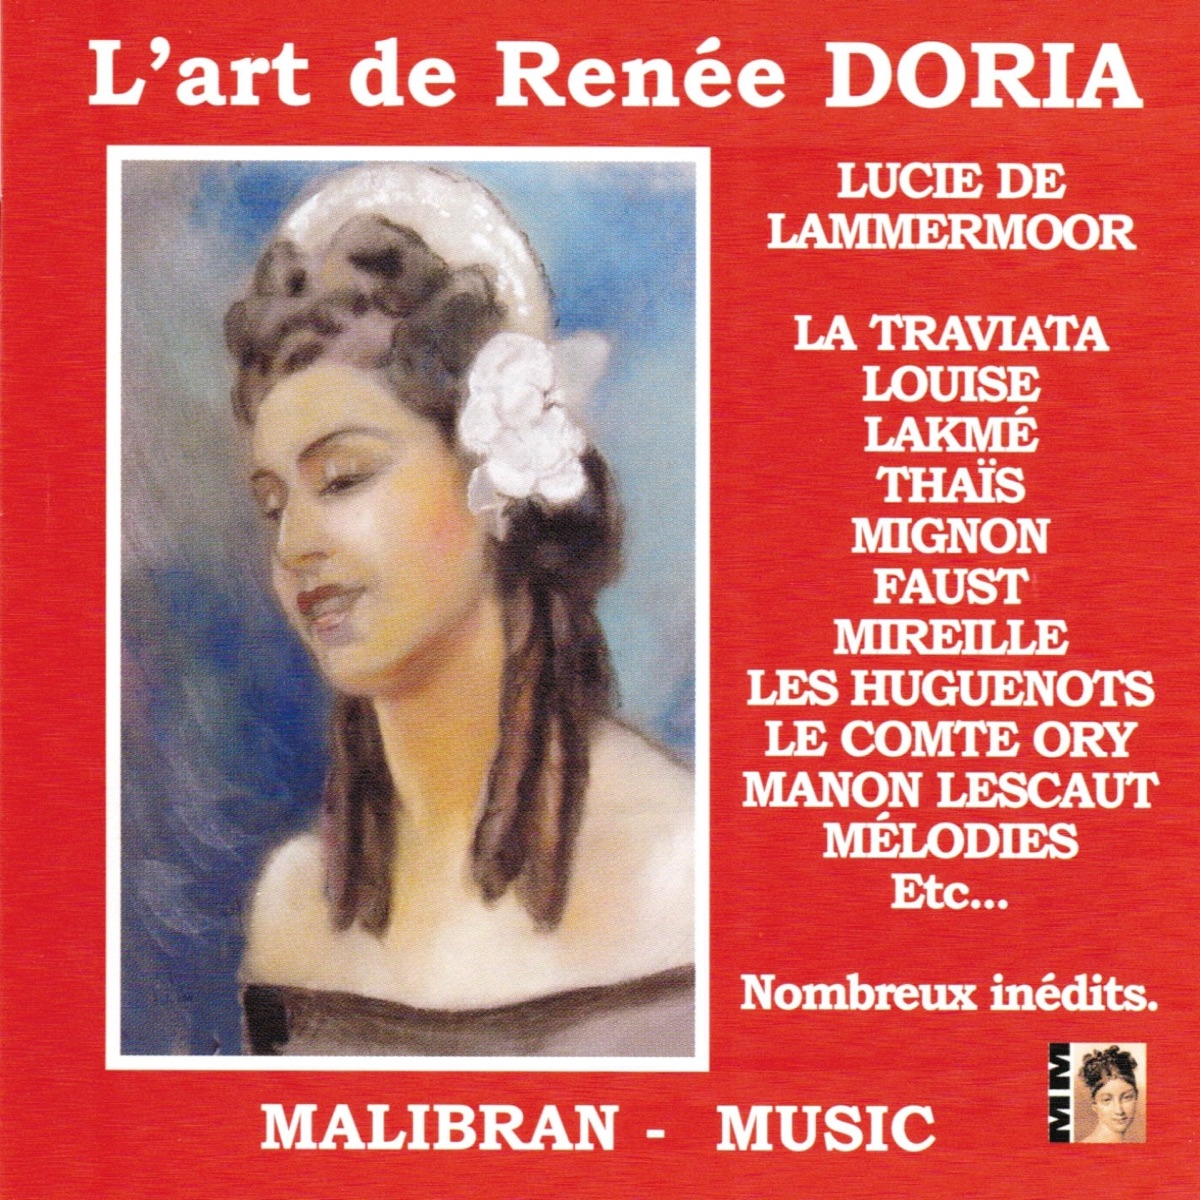 L'art de Renée Doria - Album by Renée Doria - Apple Music